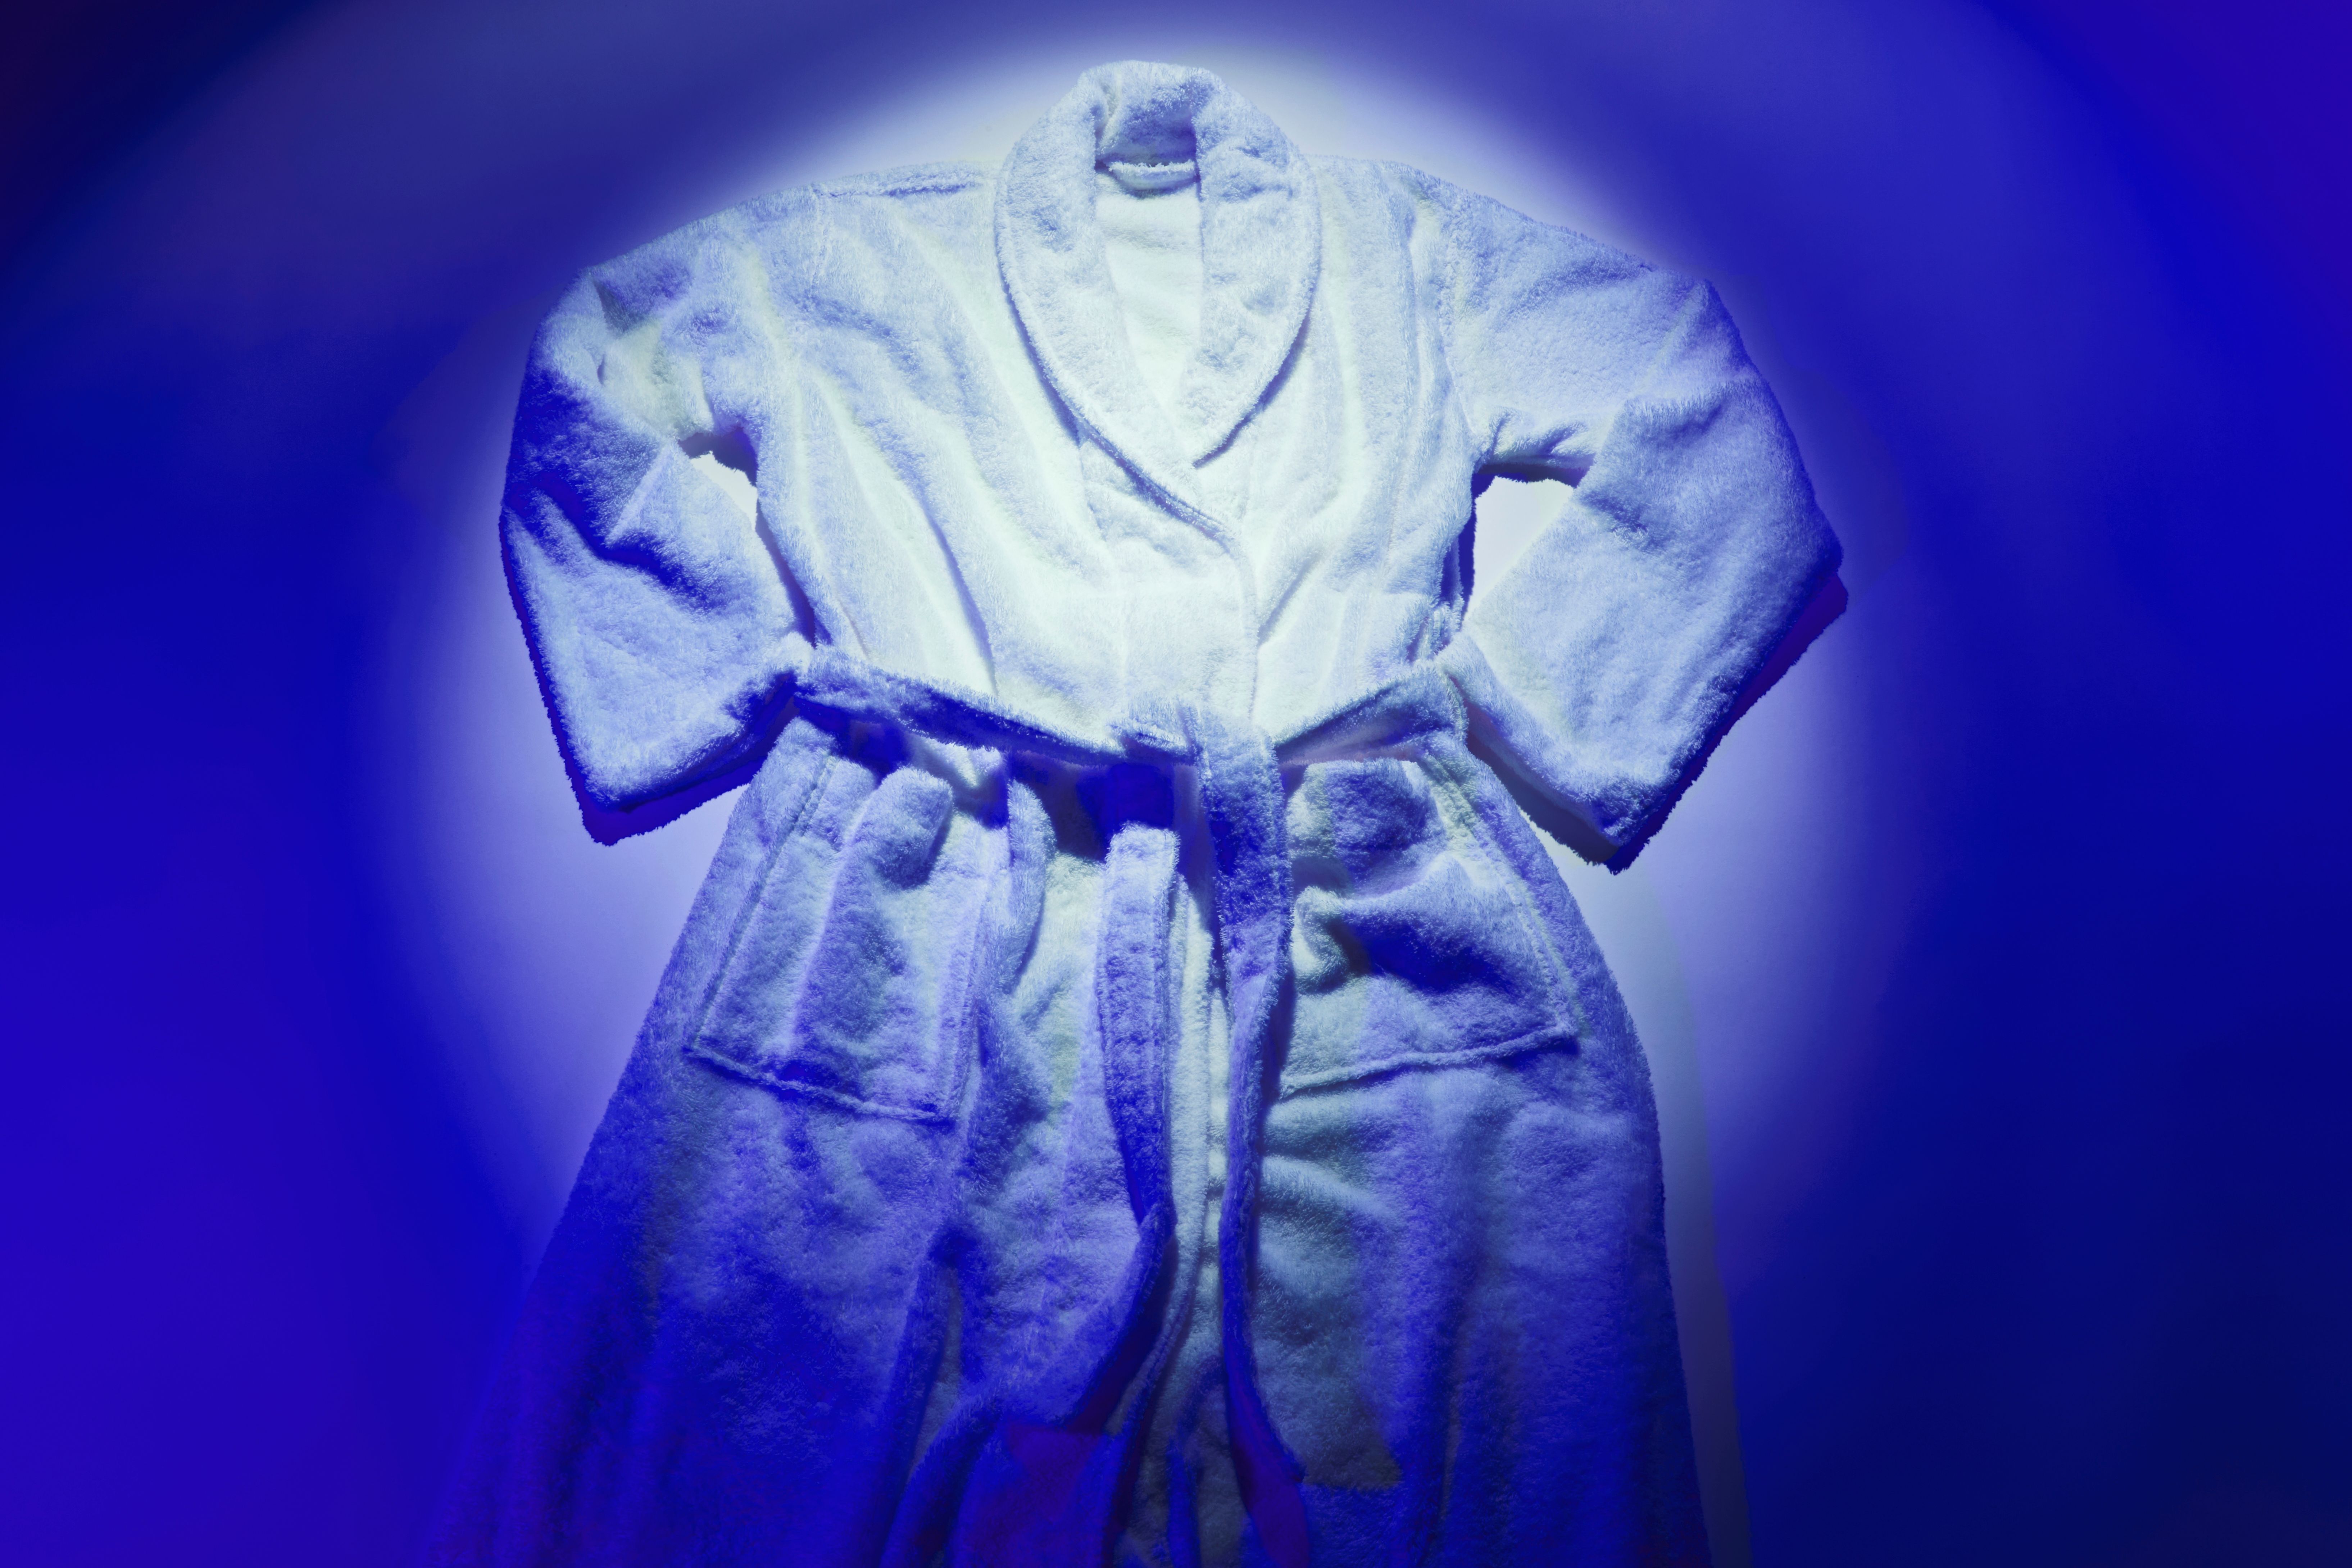 Men's Robes & Dressing Gowns | John Lewis & Partners